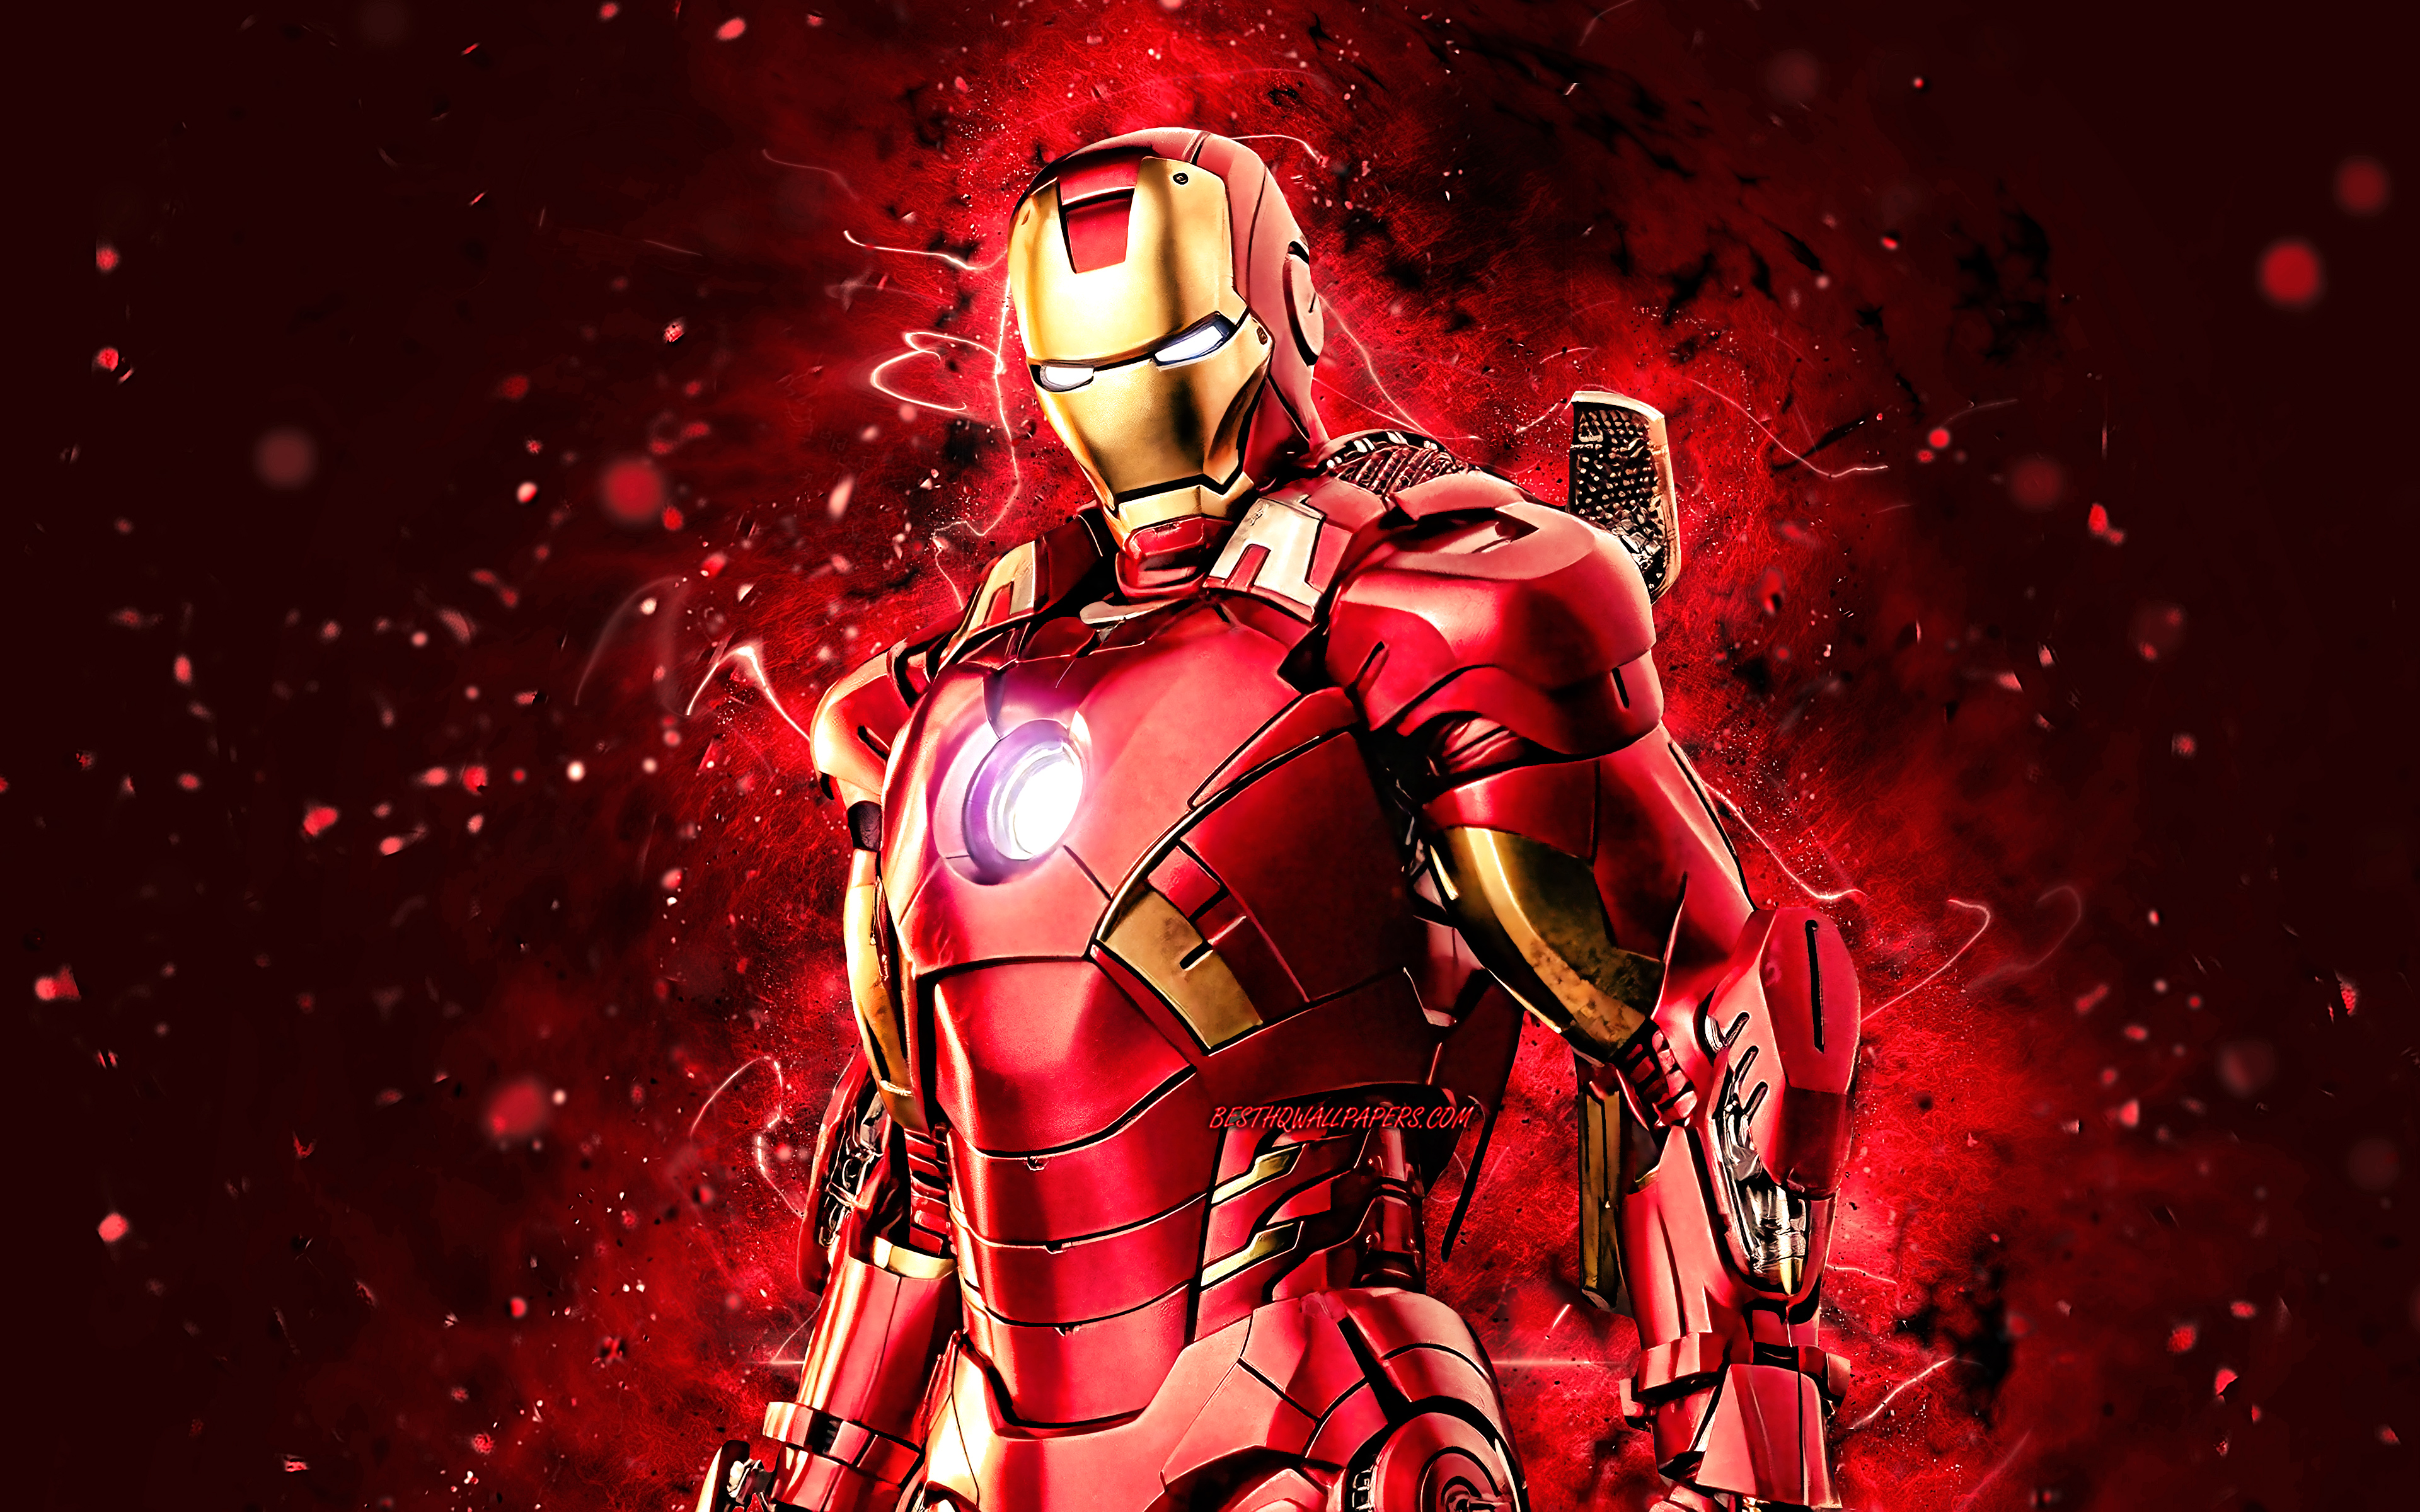 Download wallpaper 4k, IronMan, creative, superheroes, Marvel Comics, IronMan 4K, red neon lights, Cartoon Iron Man for desktop with resolution 3840x2400. High Quality HD picture wallpaper